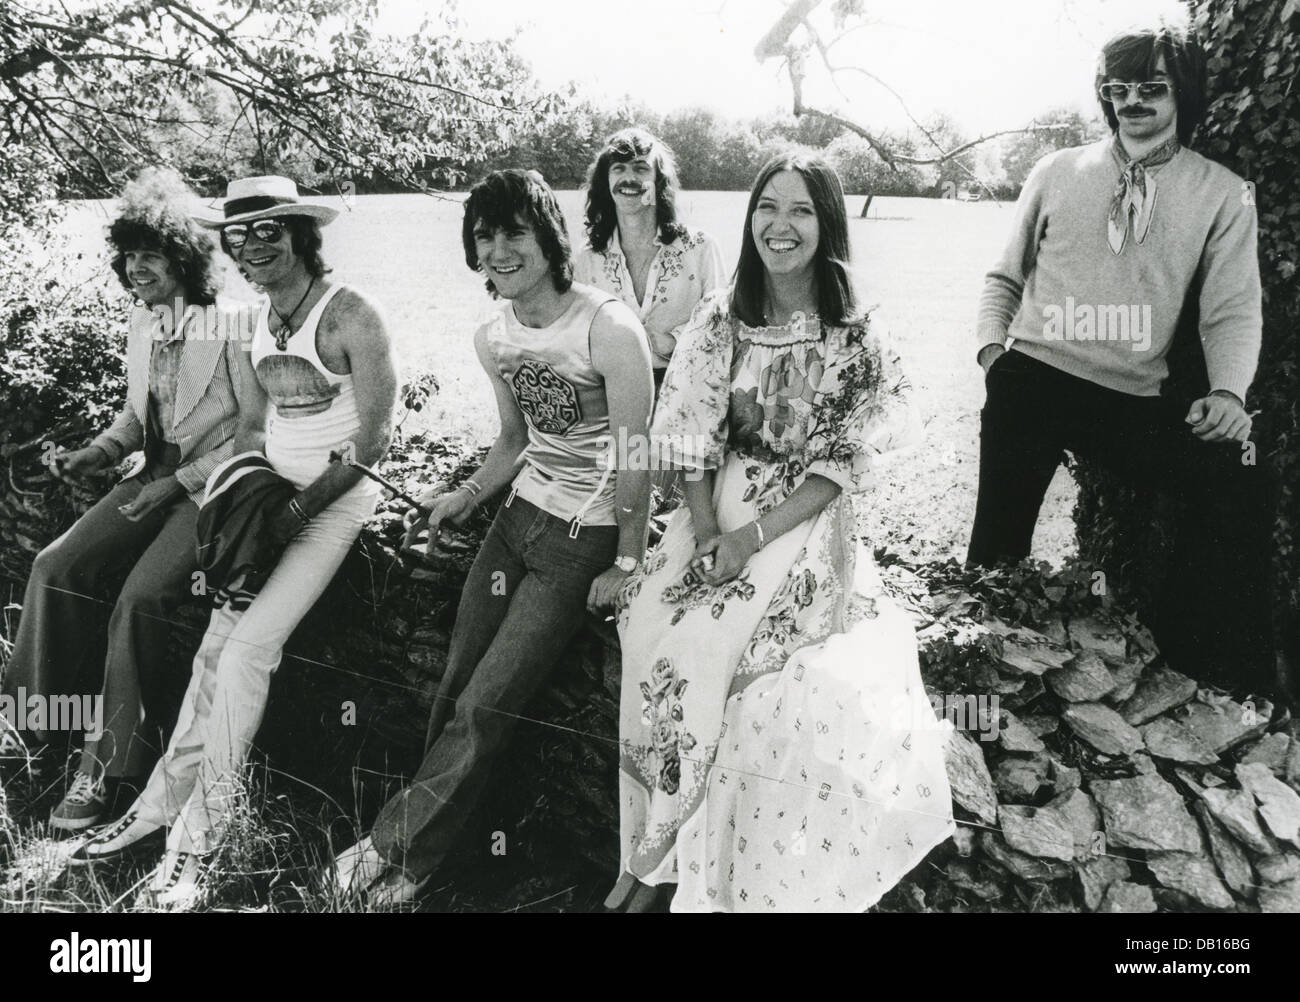 STEELEYE SPAN Promotional photo of UK folk group  about 1975 Stock Photo